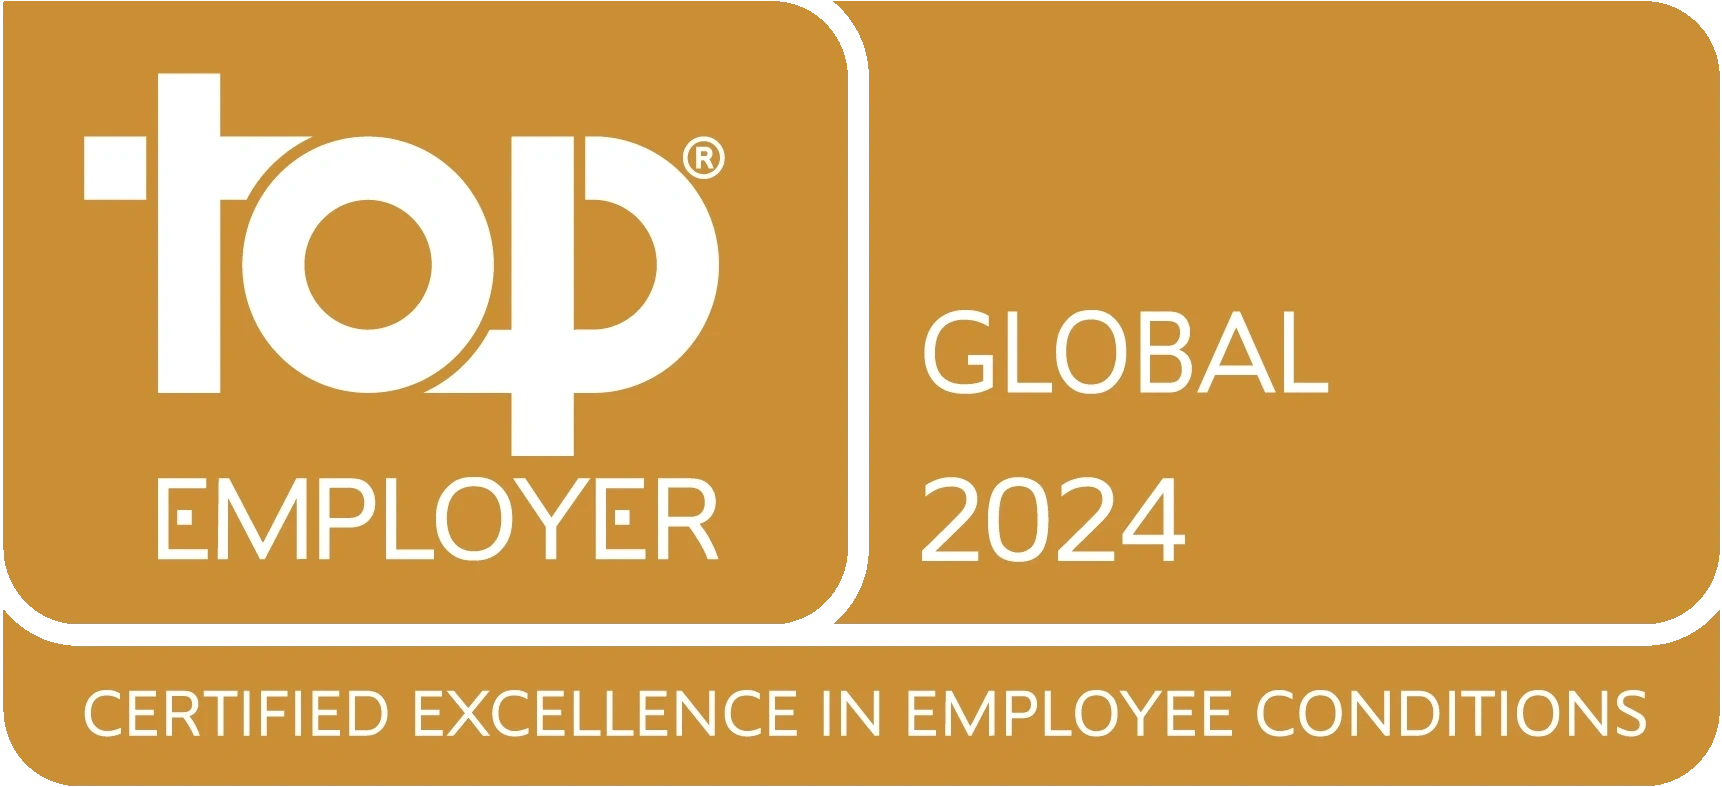 Global Top Employer